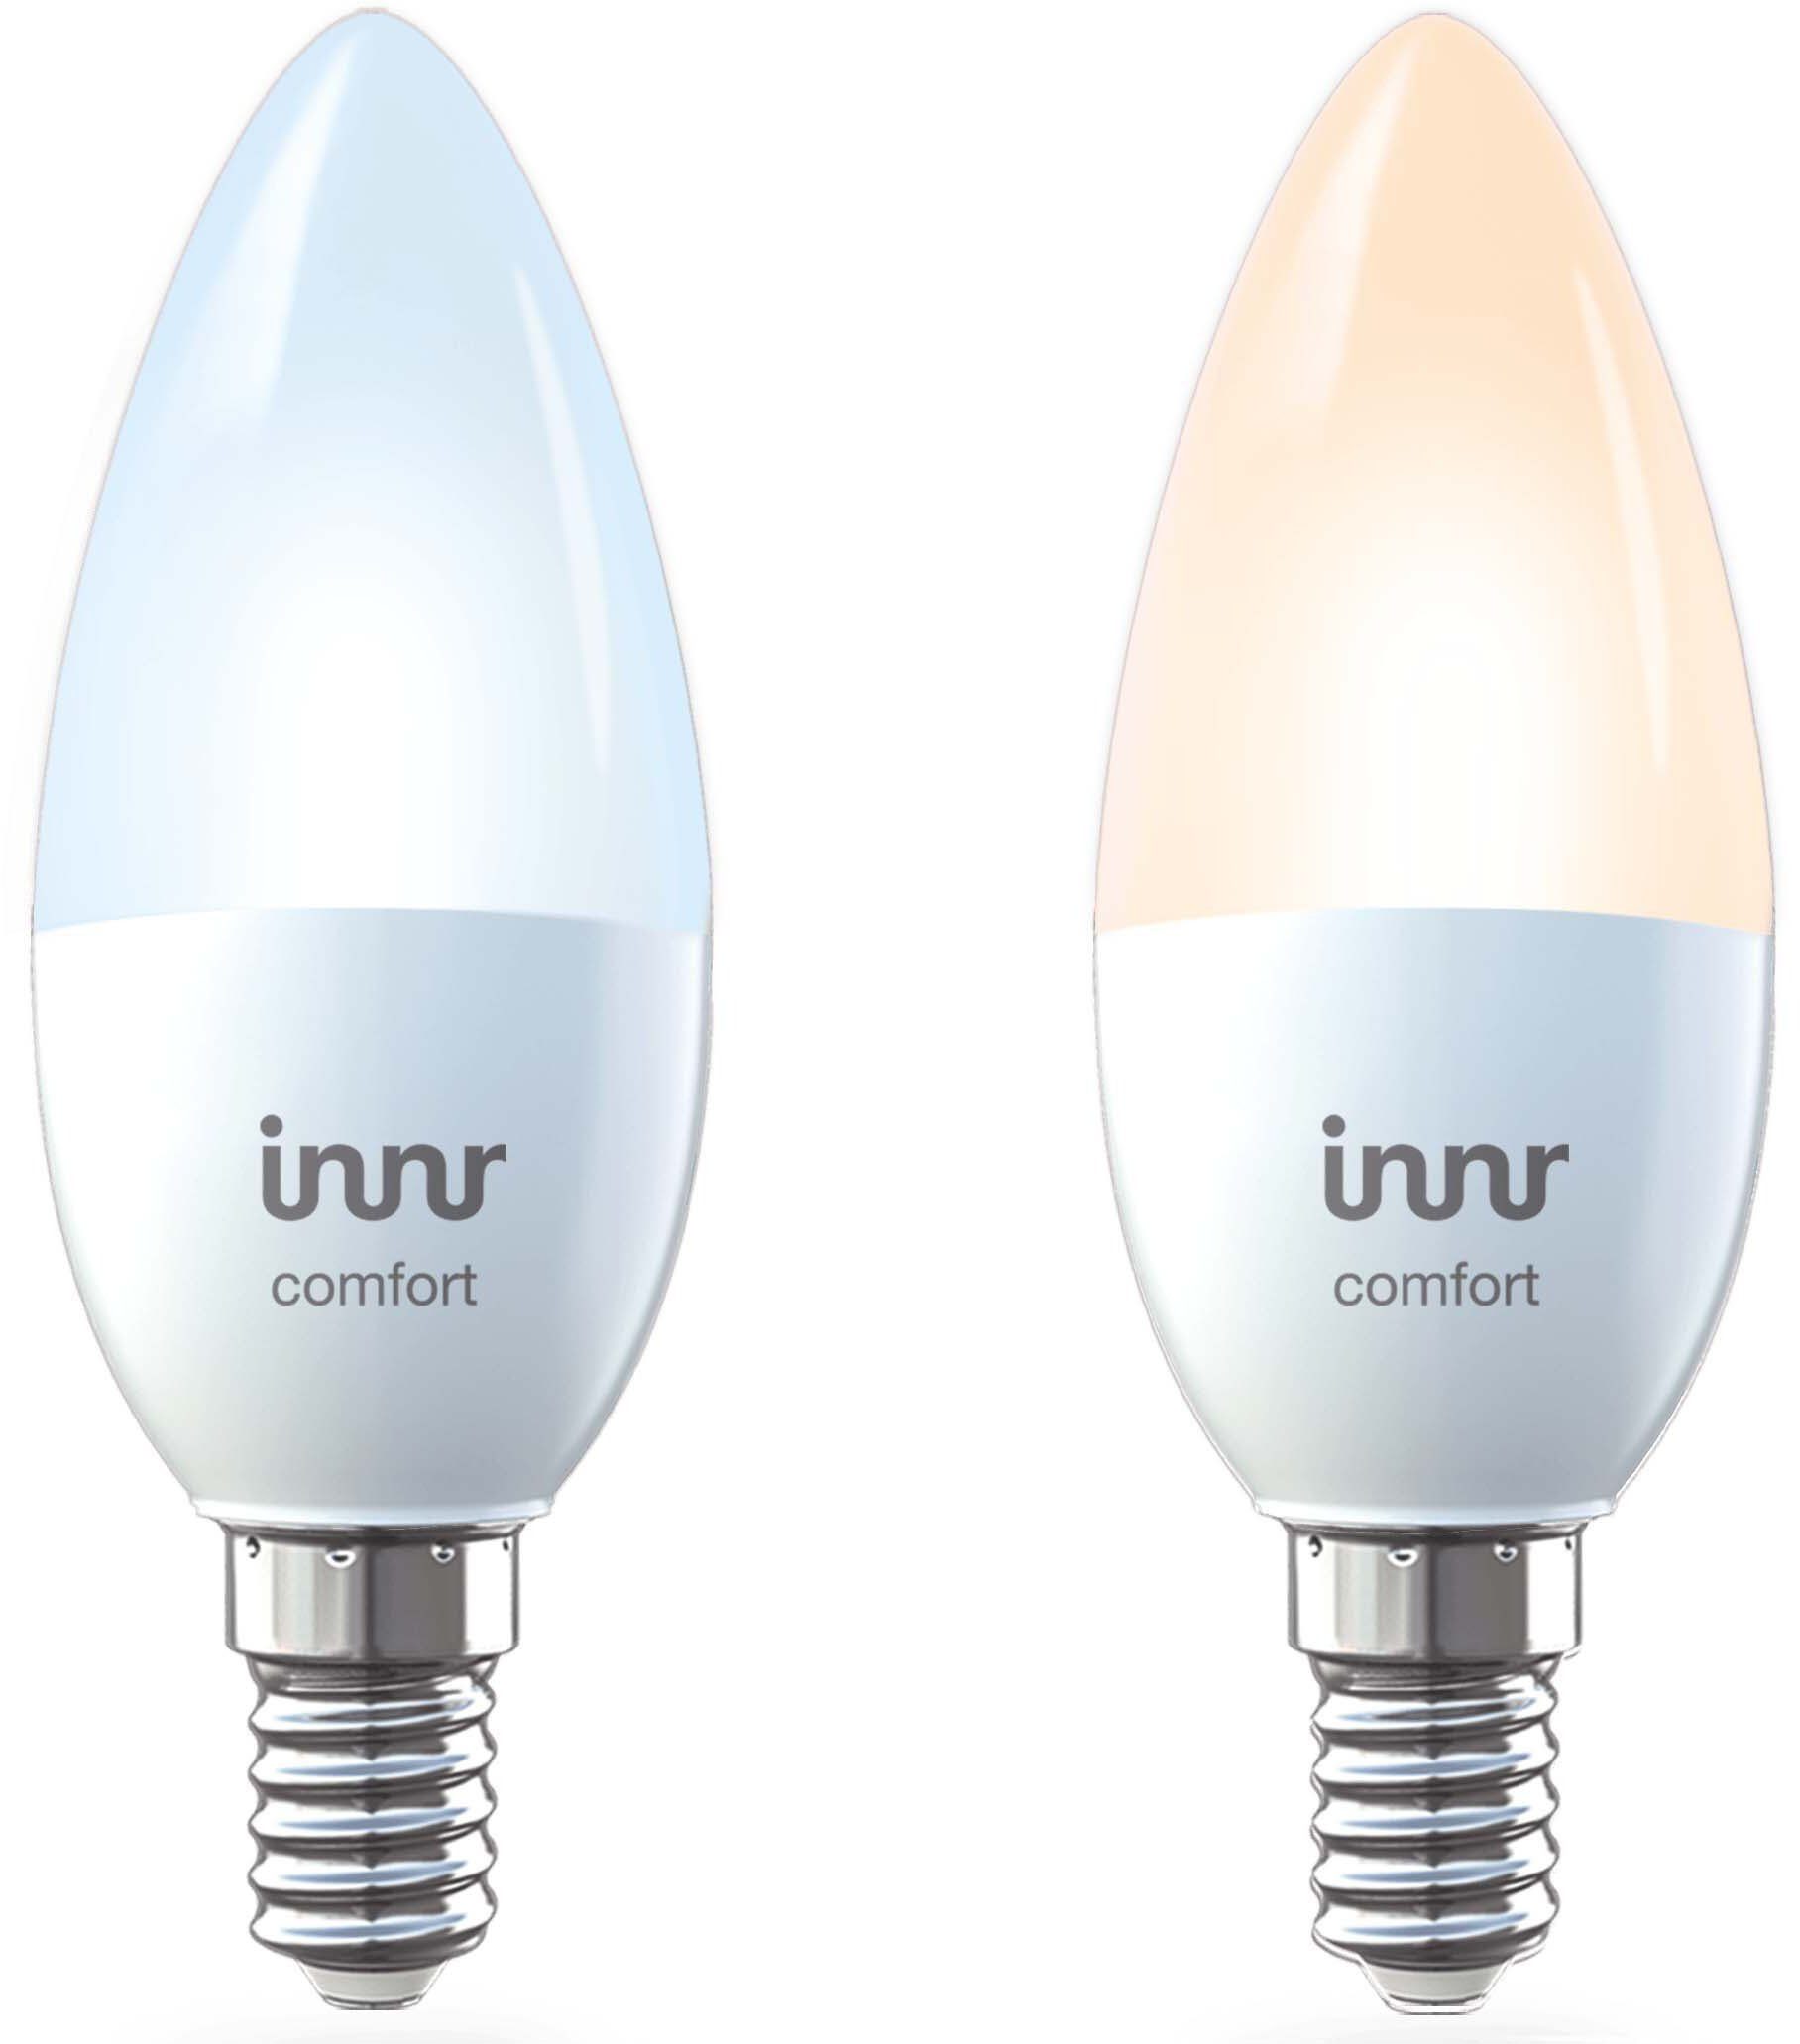 LED-Leuchtmittel comfort, - St., 2 comfort Lampe innr Candle Candle - E14 E14, Warmweiß, E14 2er